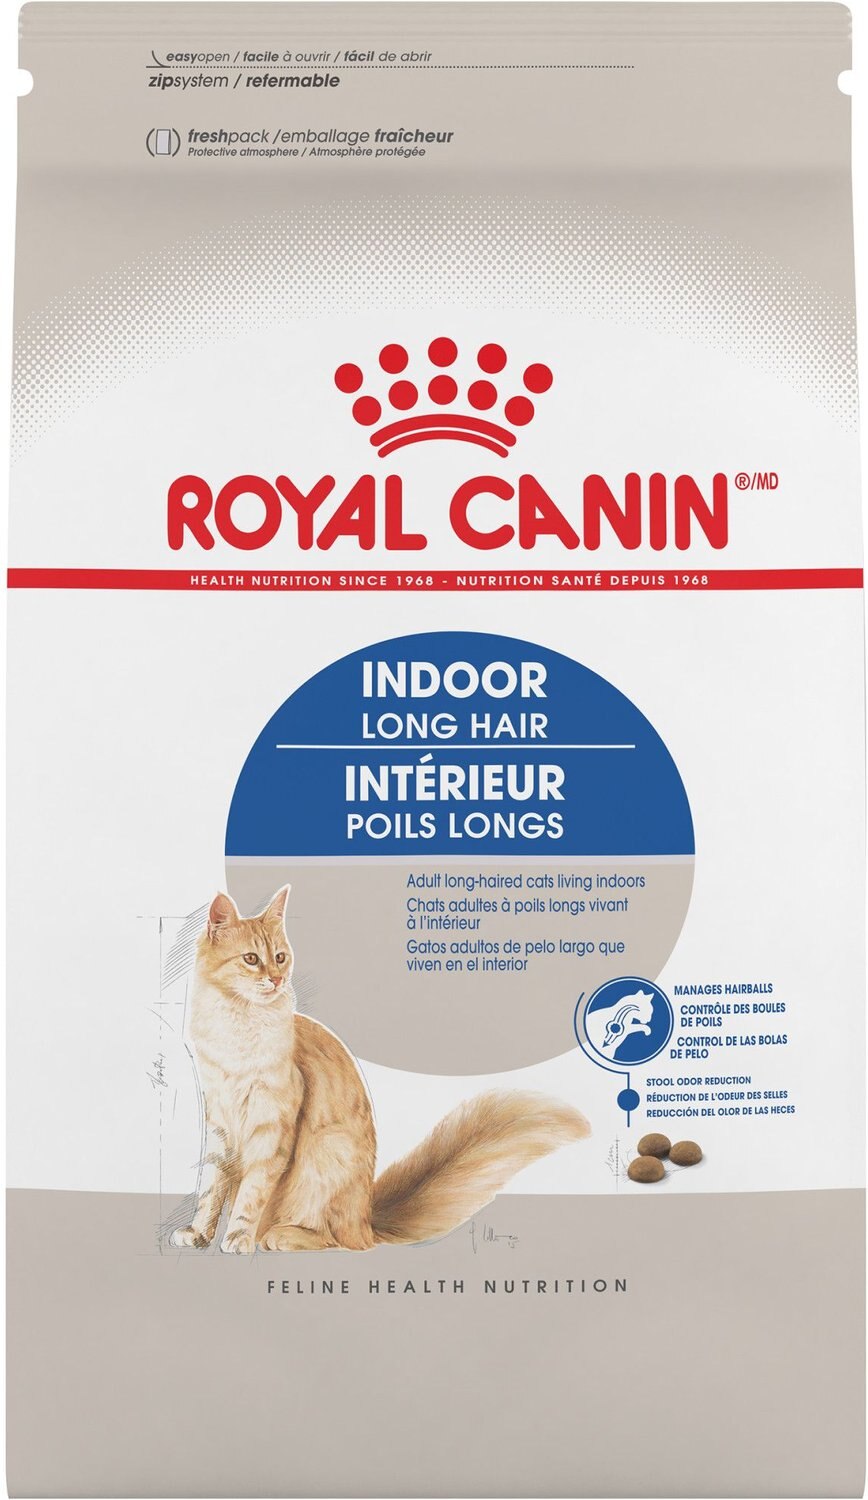 royal canin hairball control cat food